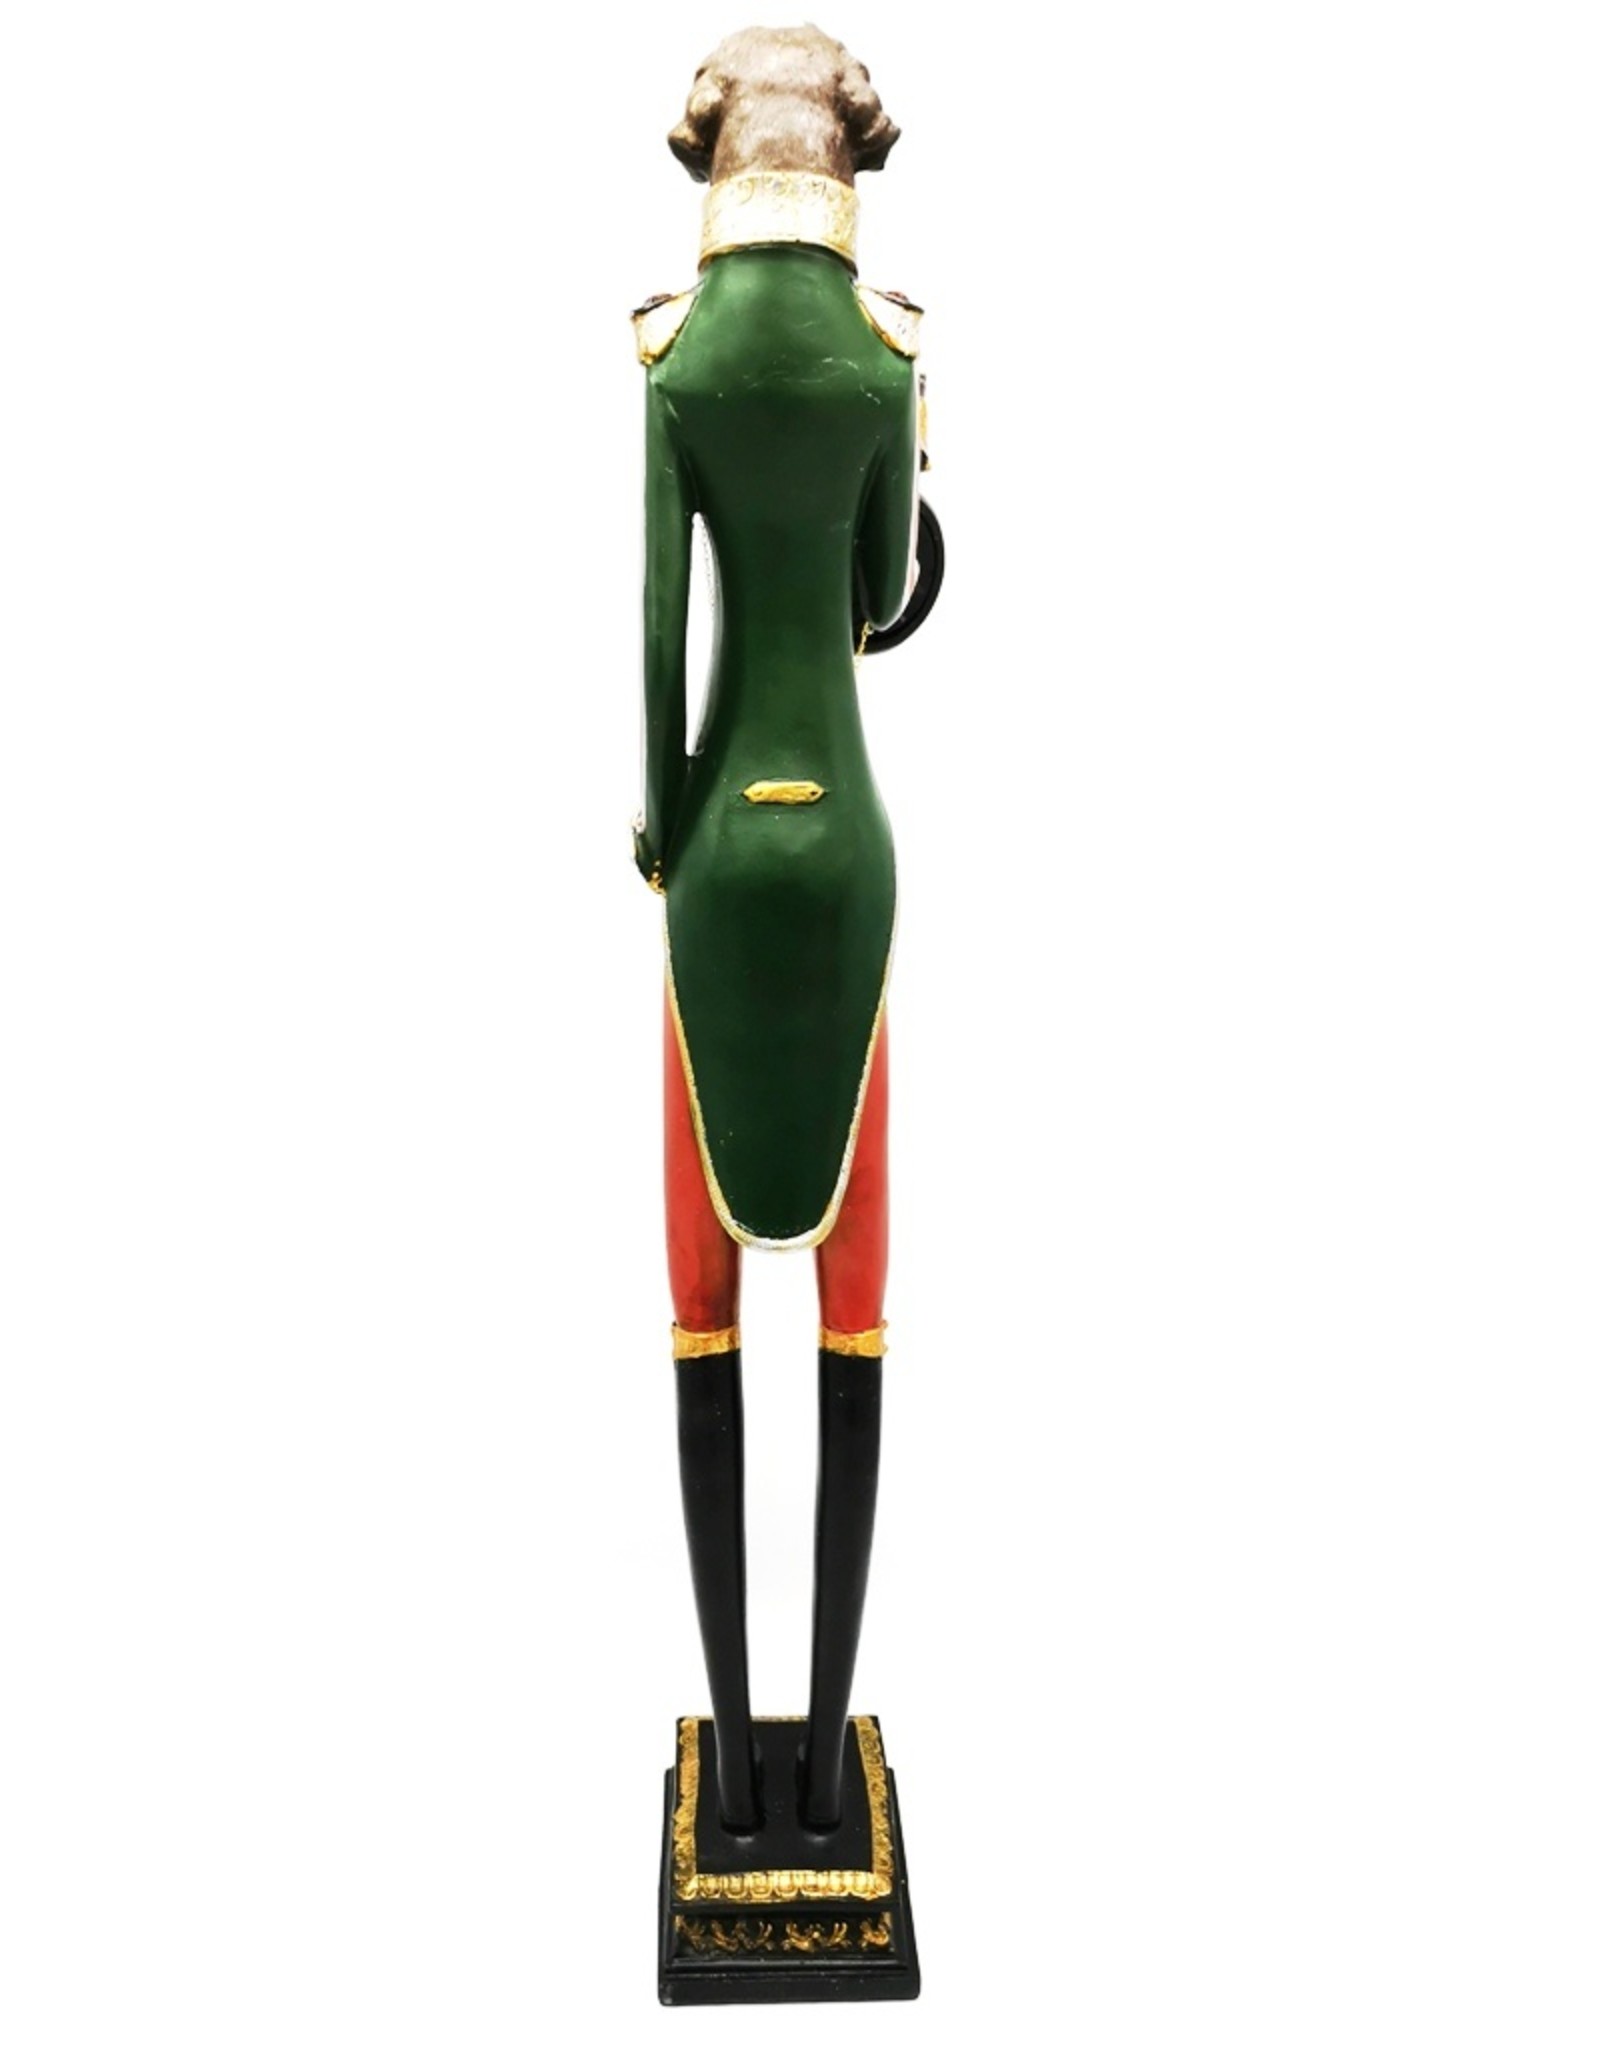 Trukado Giftware Figurines Collectables - Saint Bernard dog wears Uniform with real clock 63cm